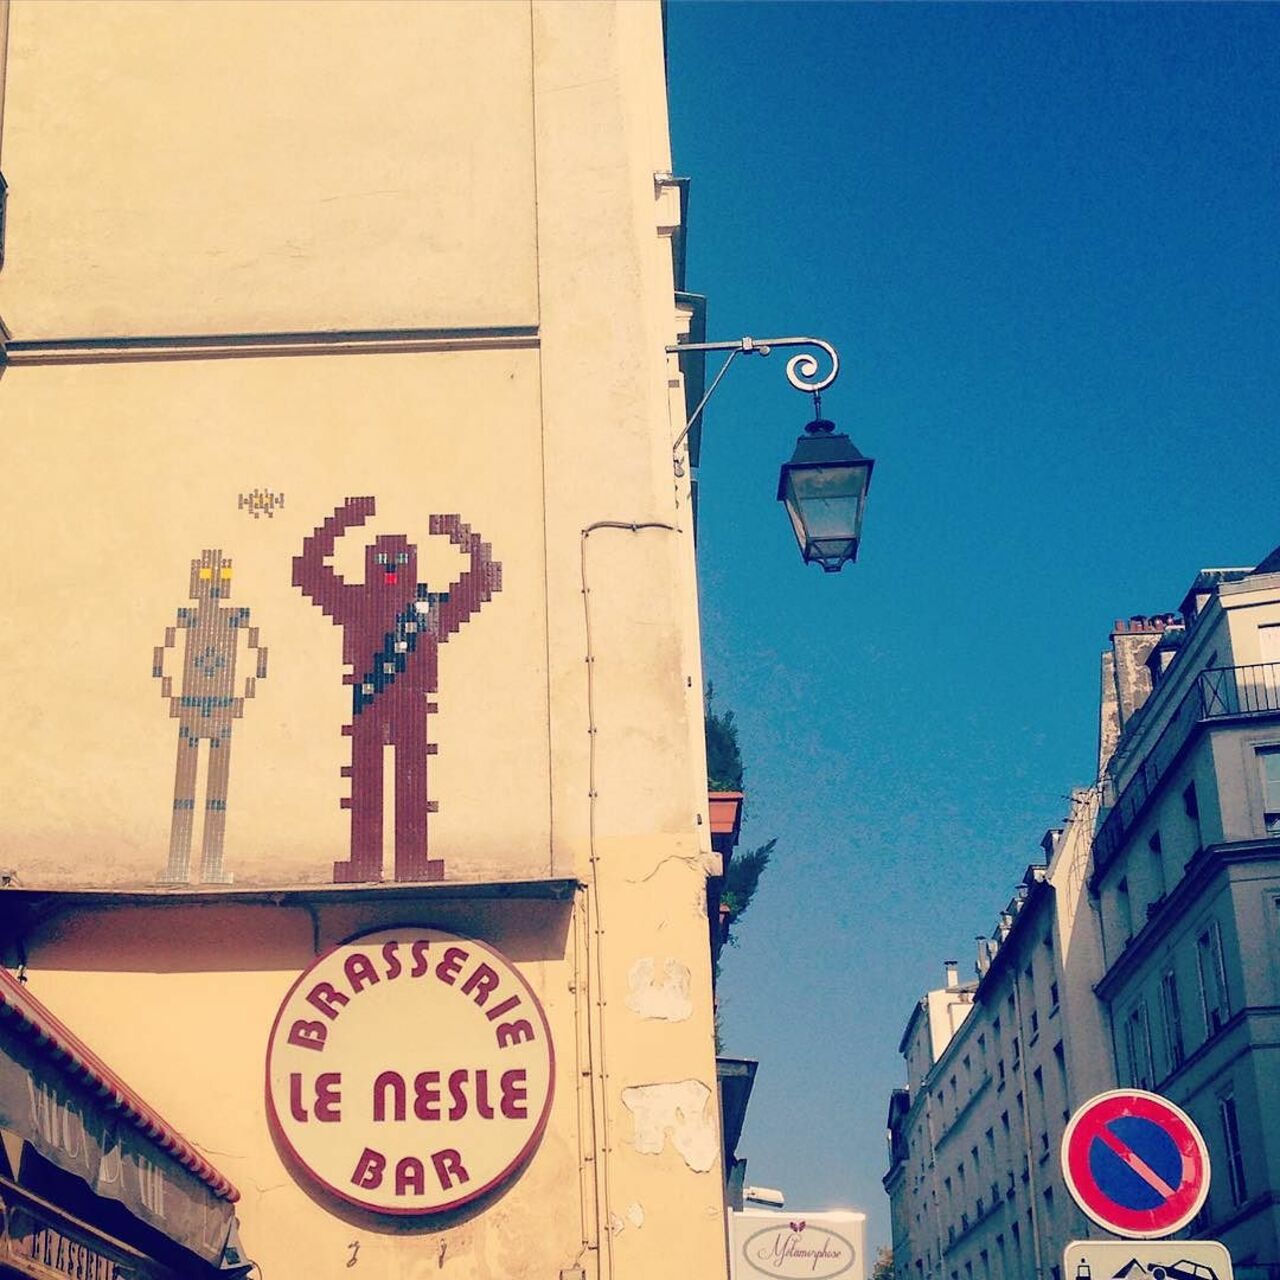 #Paris #graffiti photo by @ore25fr http://ift.tt/1WdISq2 #StreetArt https://t.co/4YdQoaWrKF